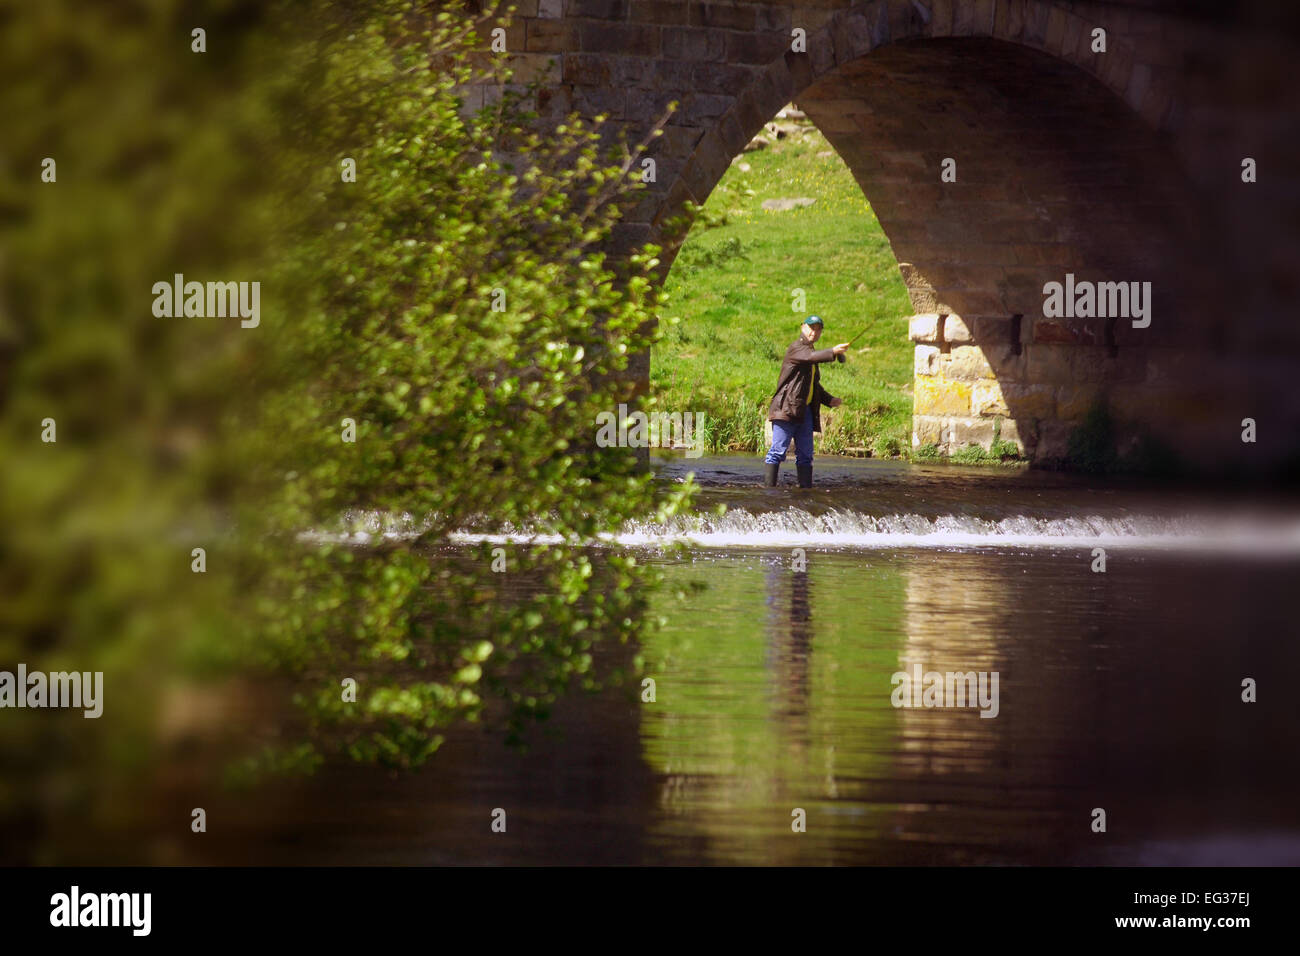 Pescatore al ponte sul fiume Coquet, Paperhaugh vicino a Rothbury, Northumberland Foto Stock